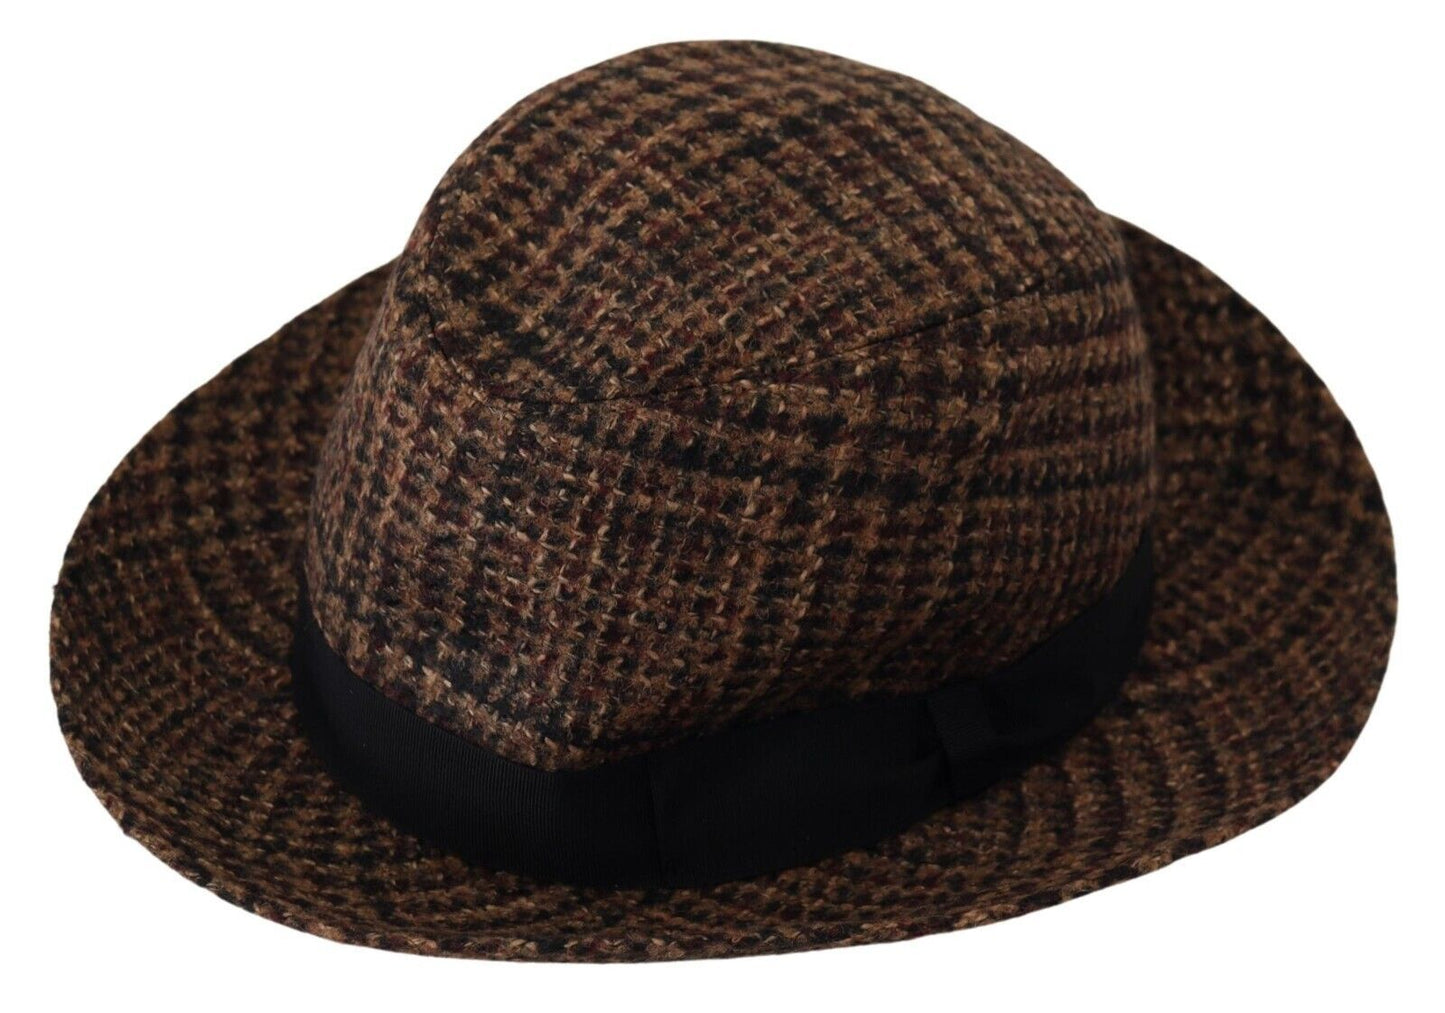 Elegant Brown Fedora Hat - Winter Chic Accessory